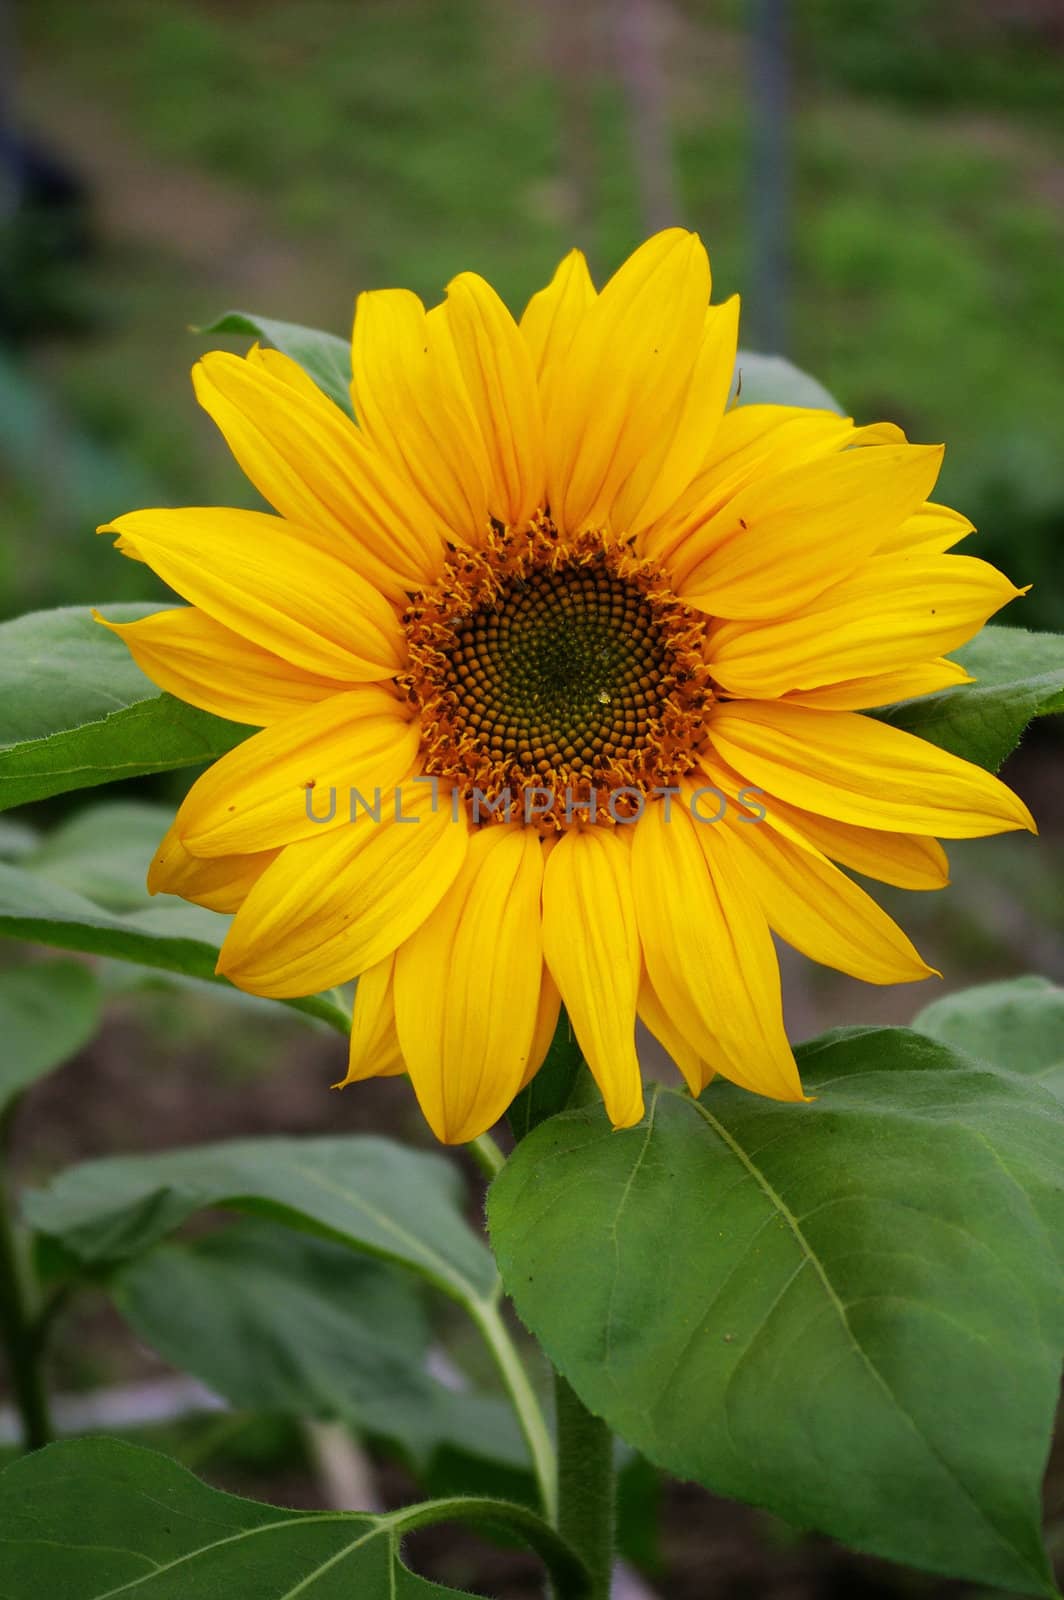 Sunflowers background